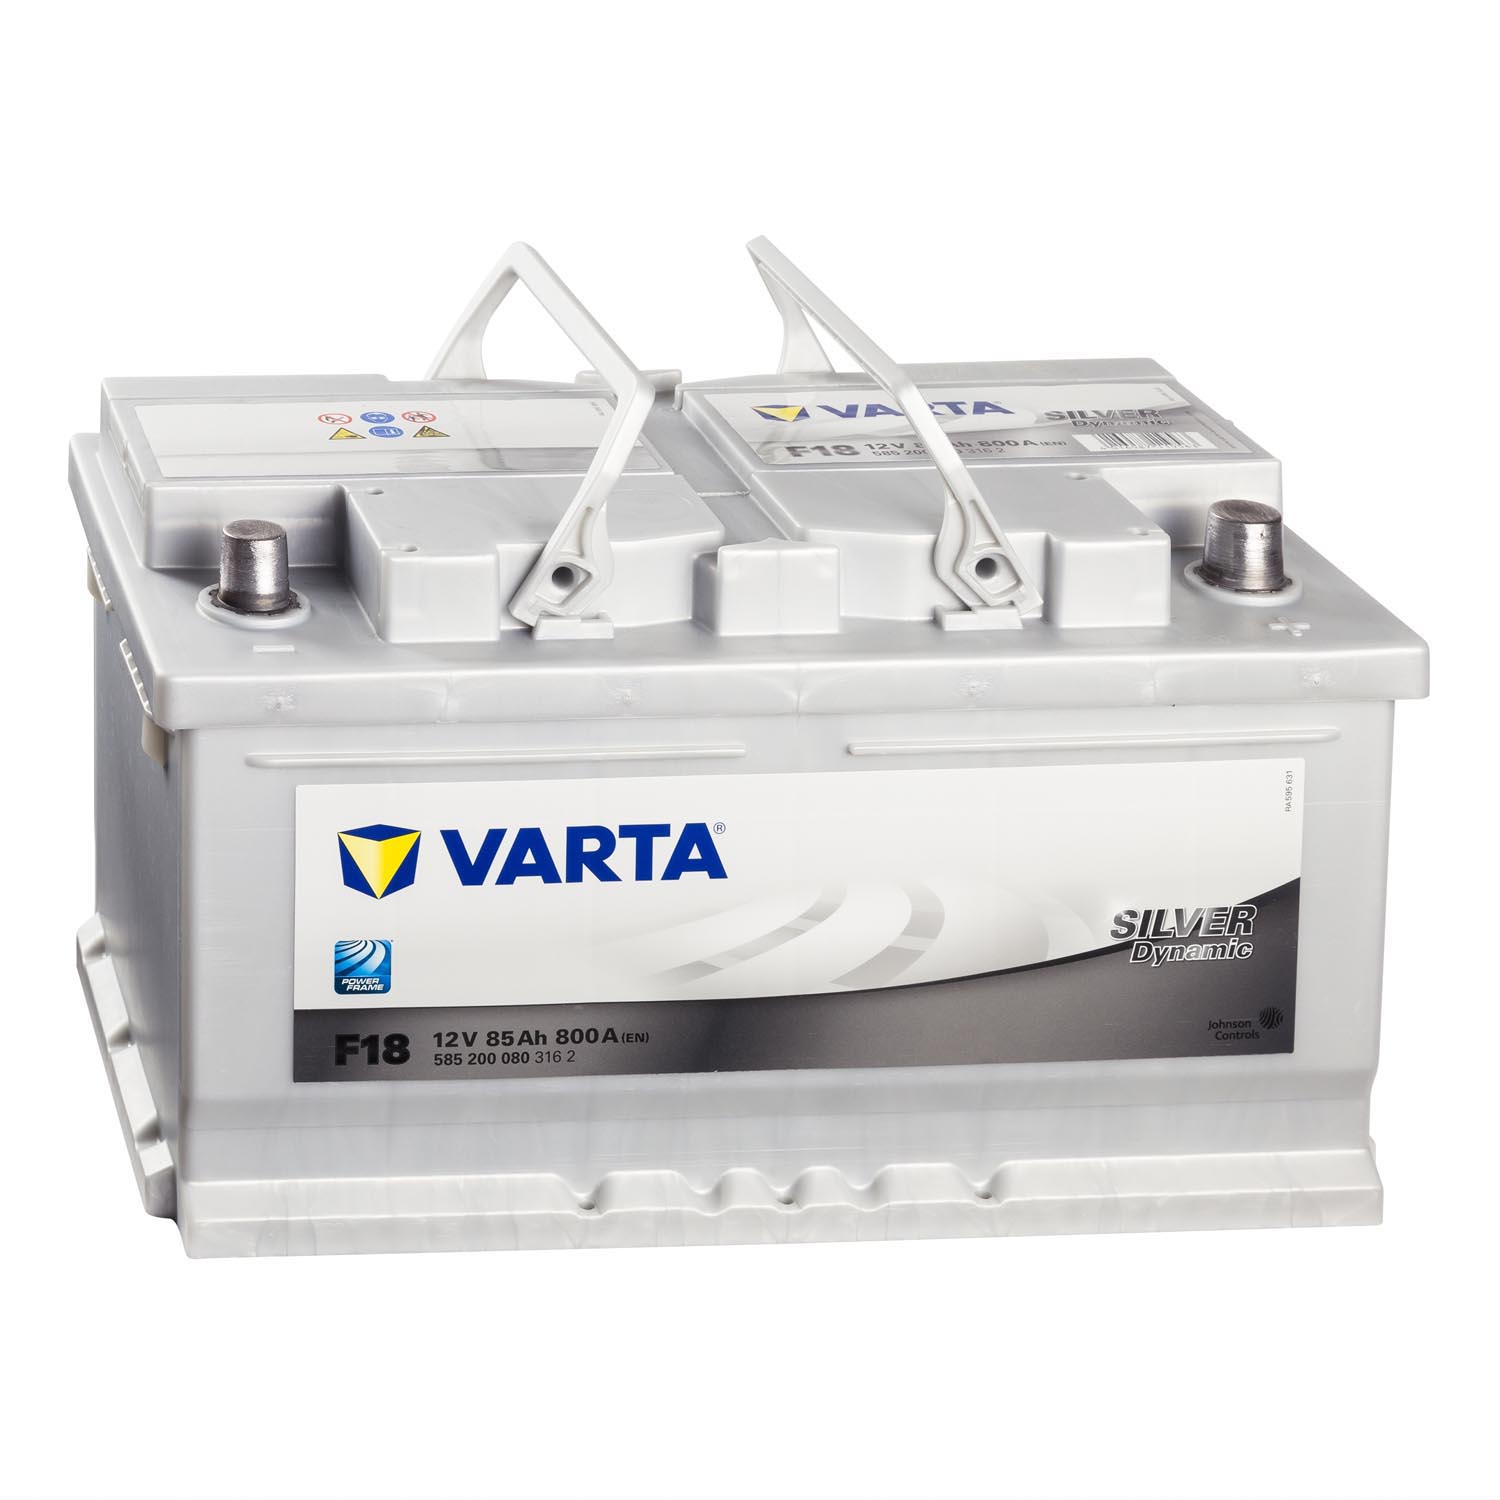 VARTA F21 SILVER dynamic AGM Autobatterie Starterbatterie 12V 80Ah EN800A